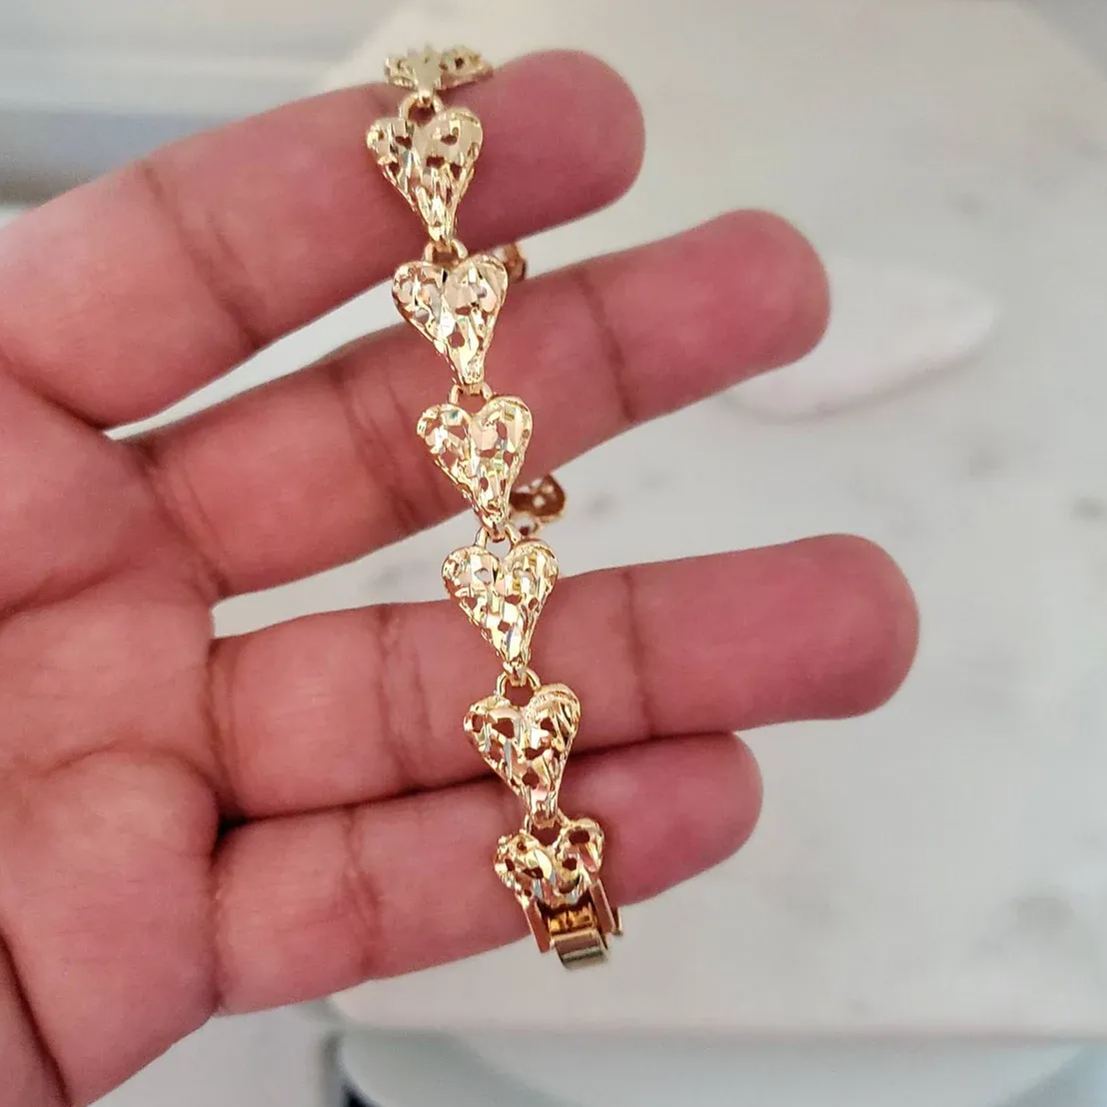 [Copy]Gold Plated Nugget Flower Shaped Pendant Bracelet